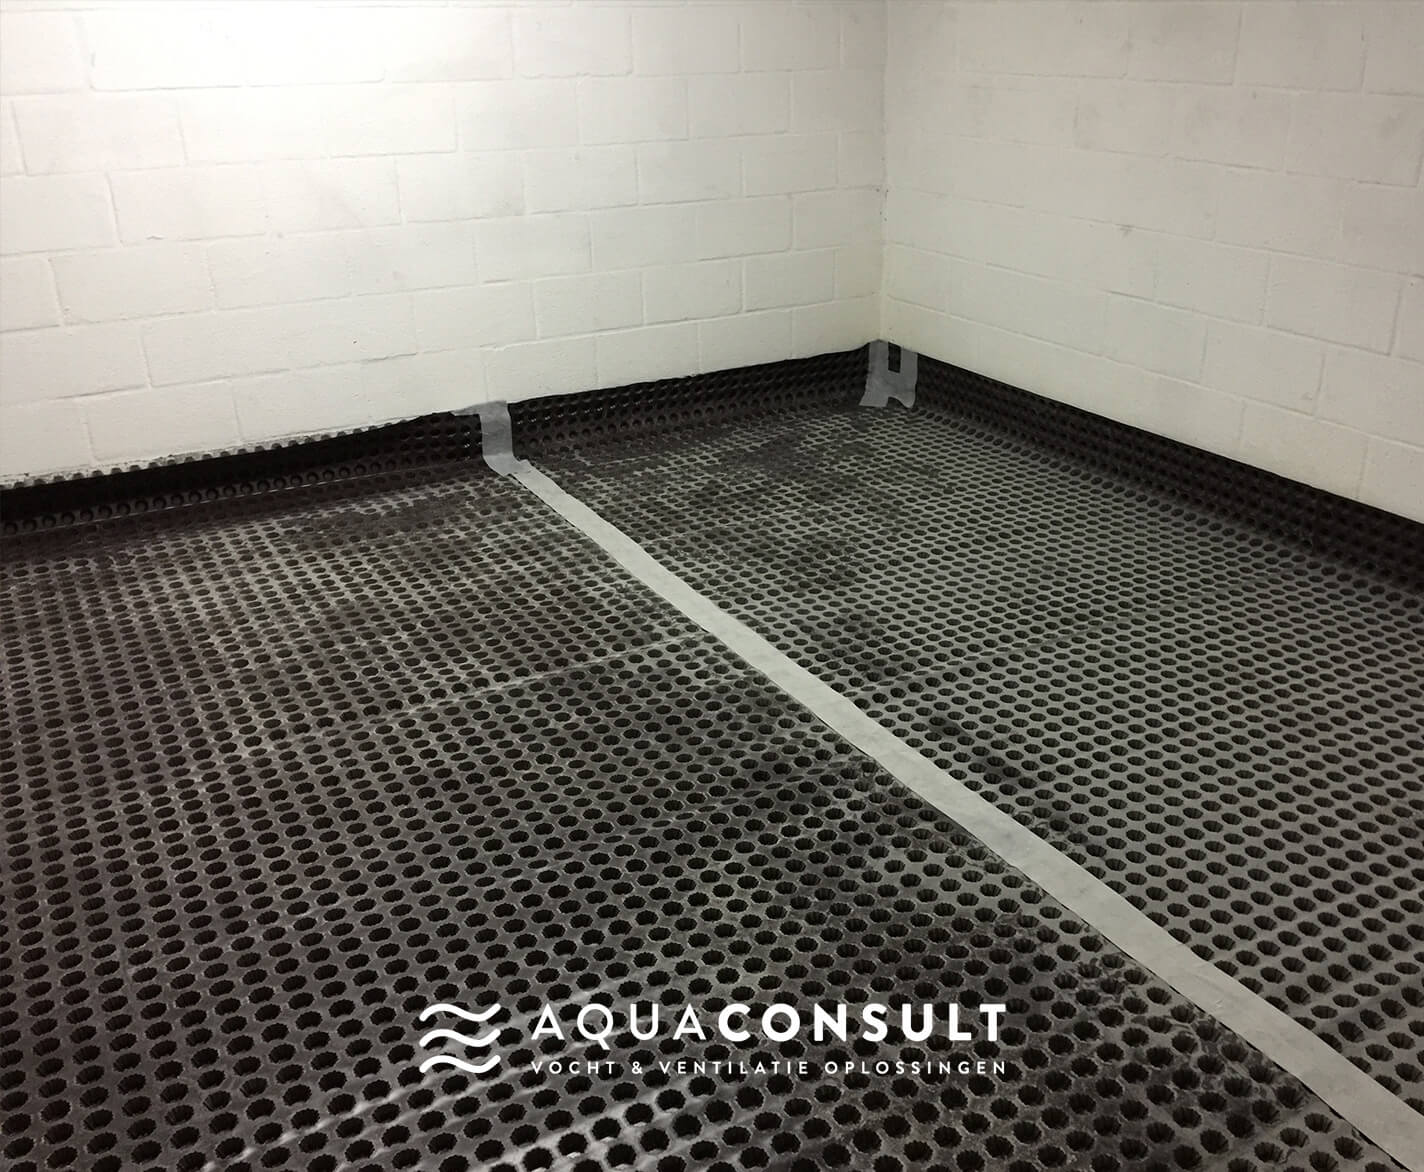 Aquaconsult cellar sealing